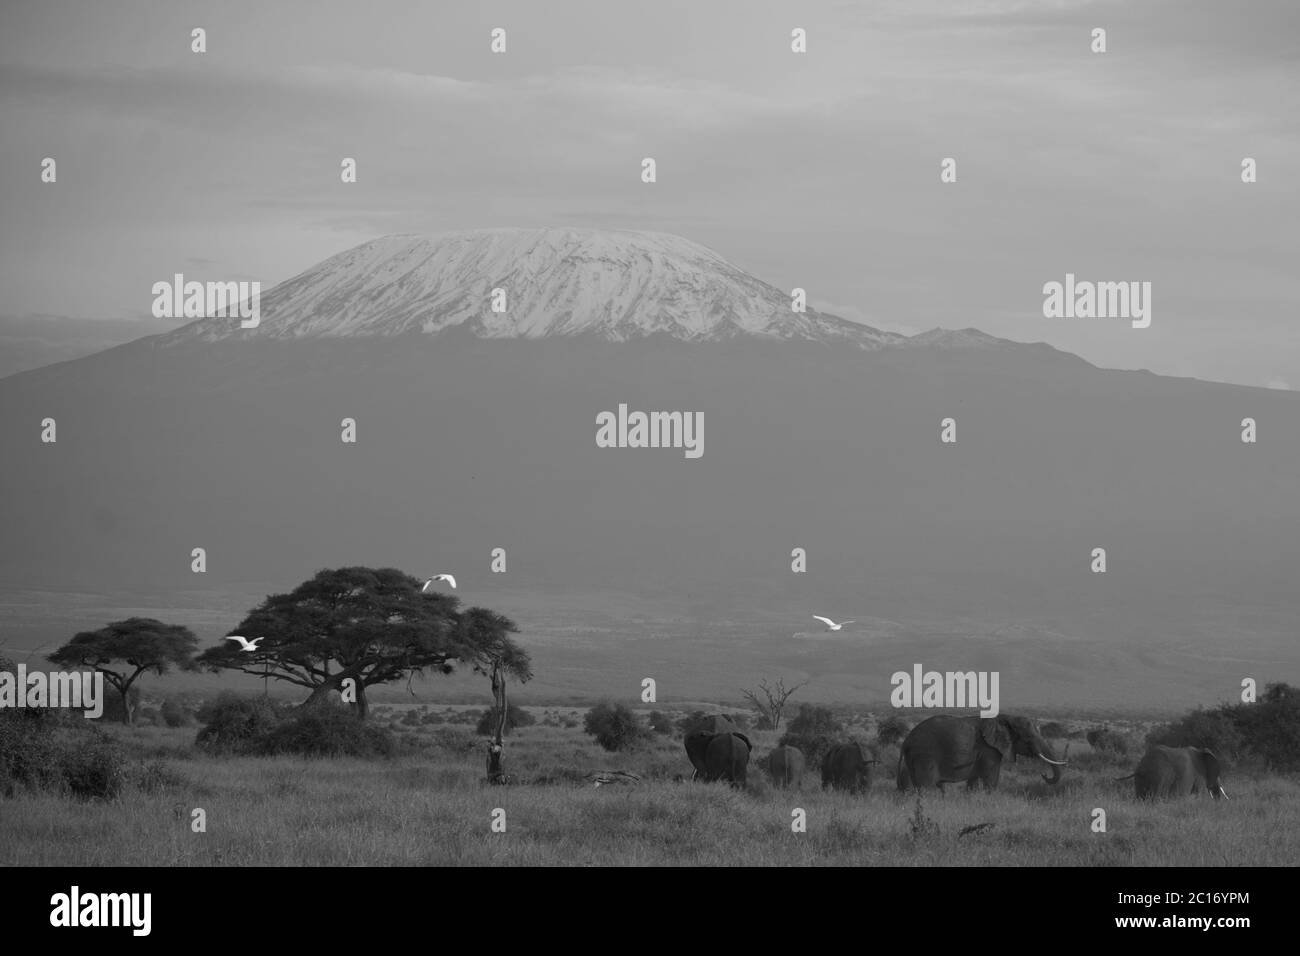 Mount kilimanjaro animals Black and White Stock Photos & Images - Alamy